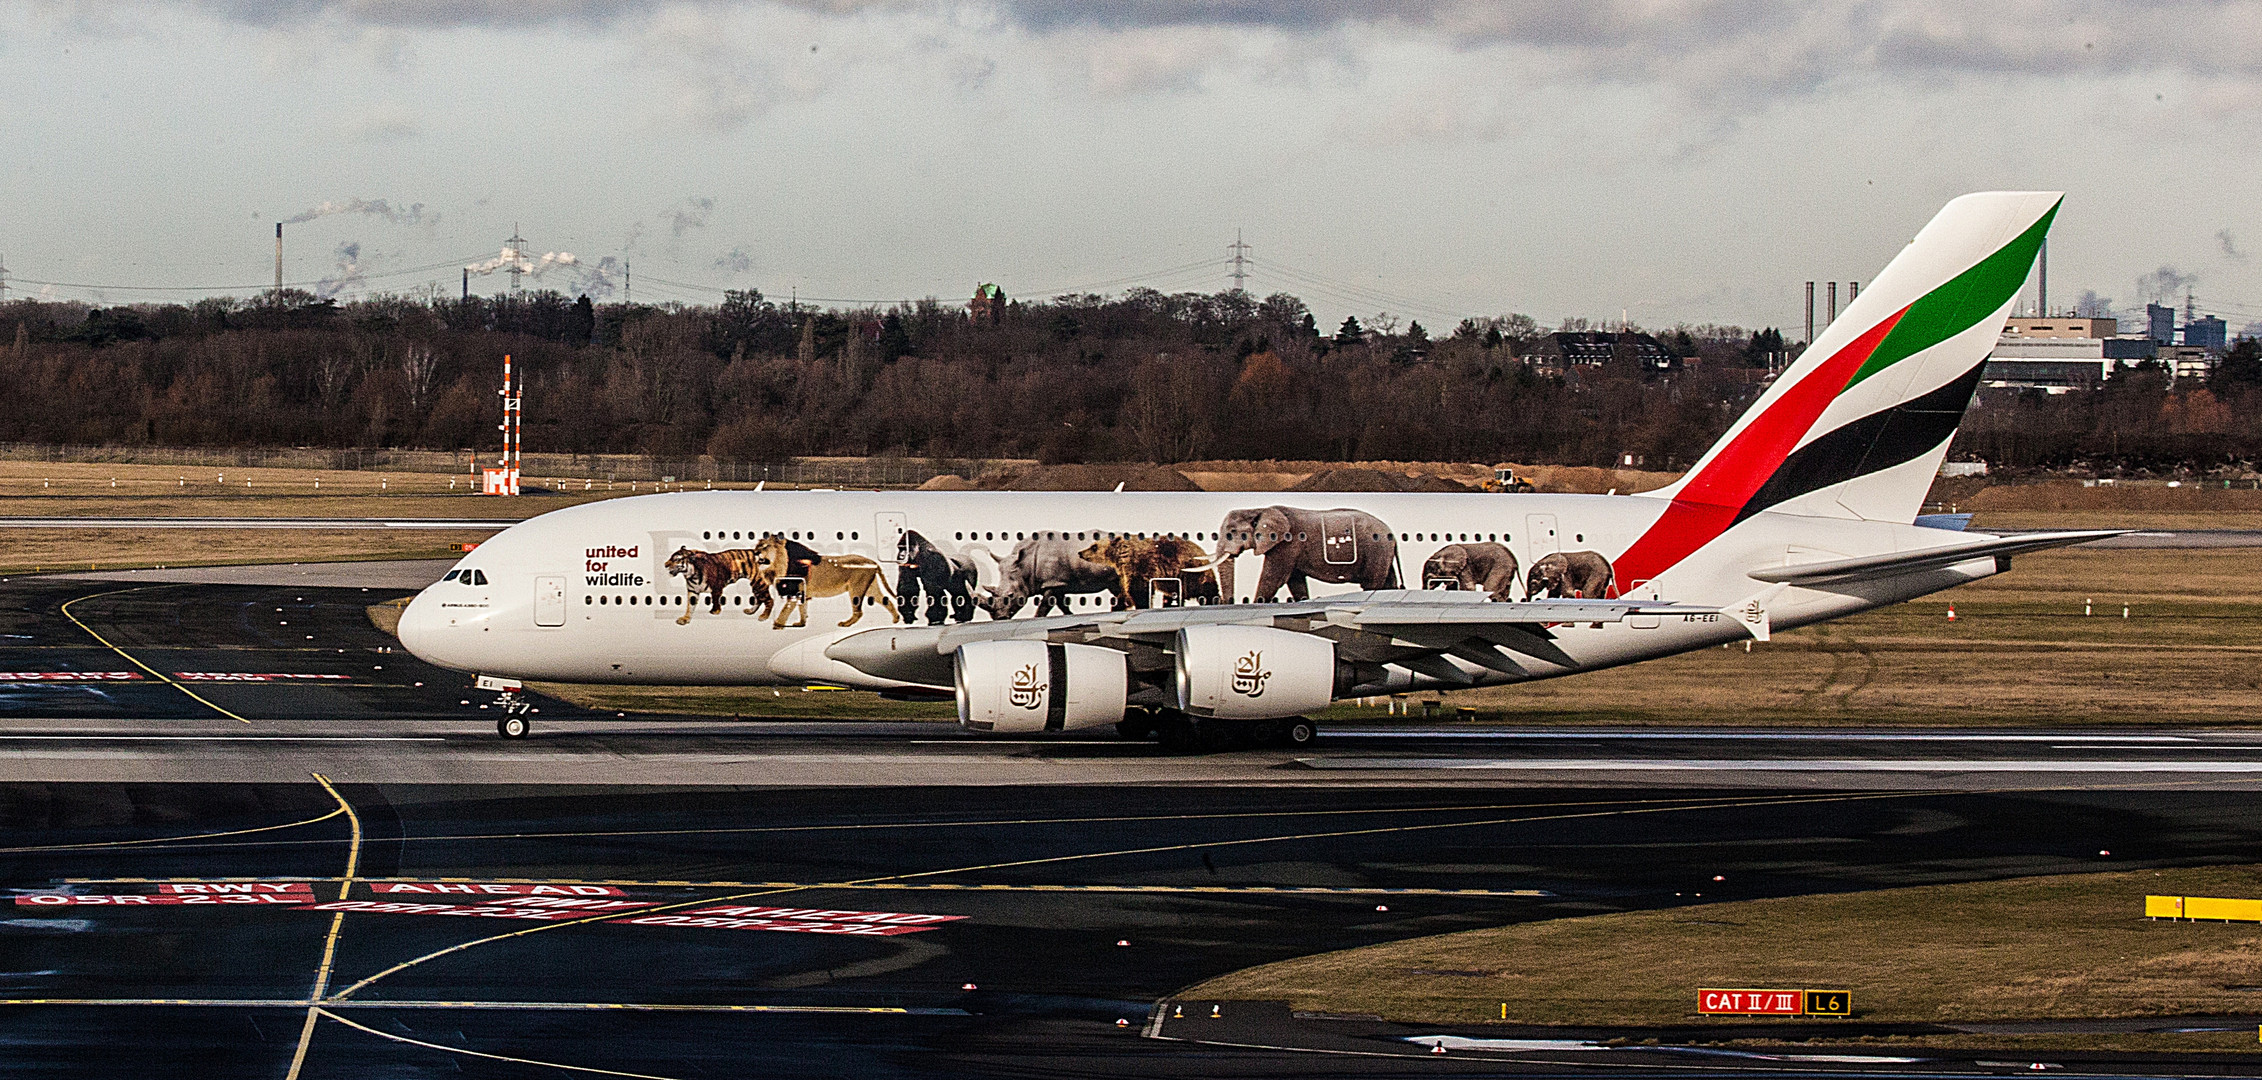 Emirates AIRBUS A 380 "United for Wildlife"